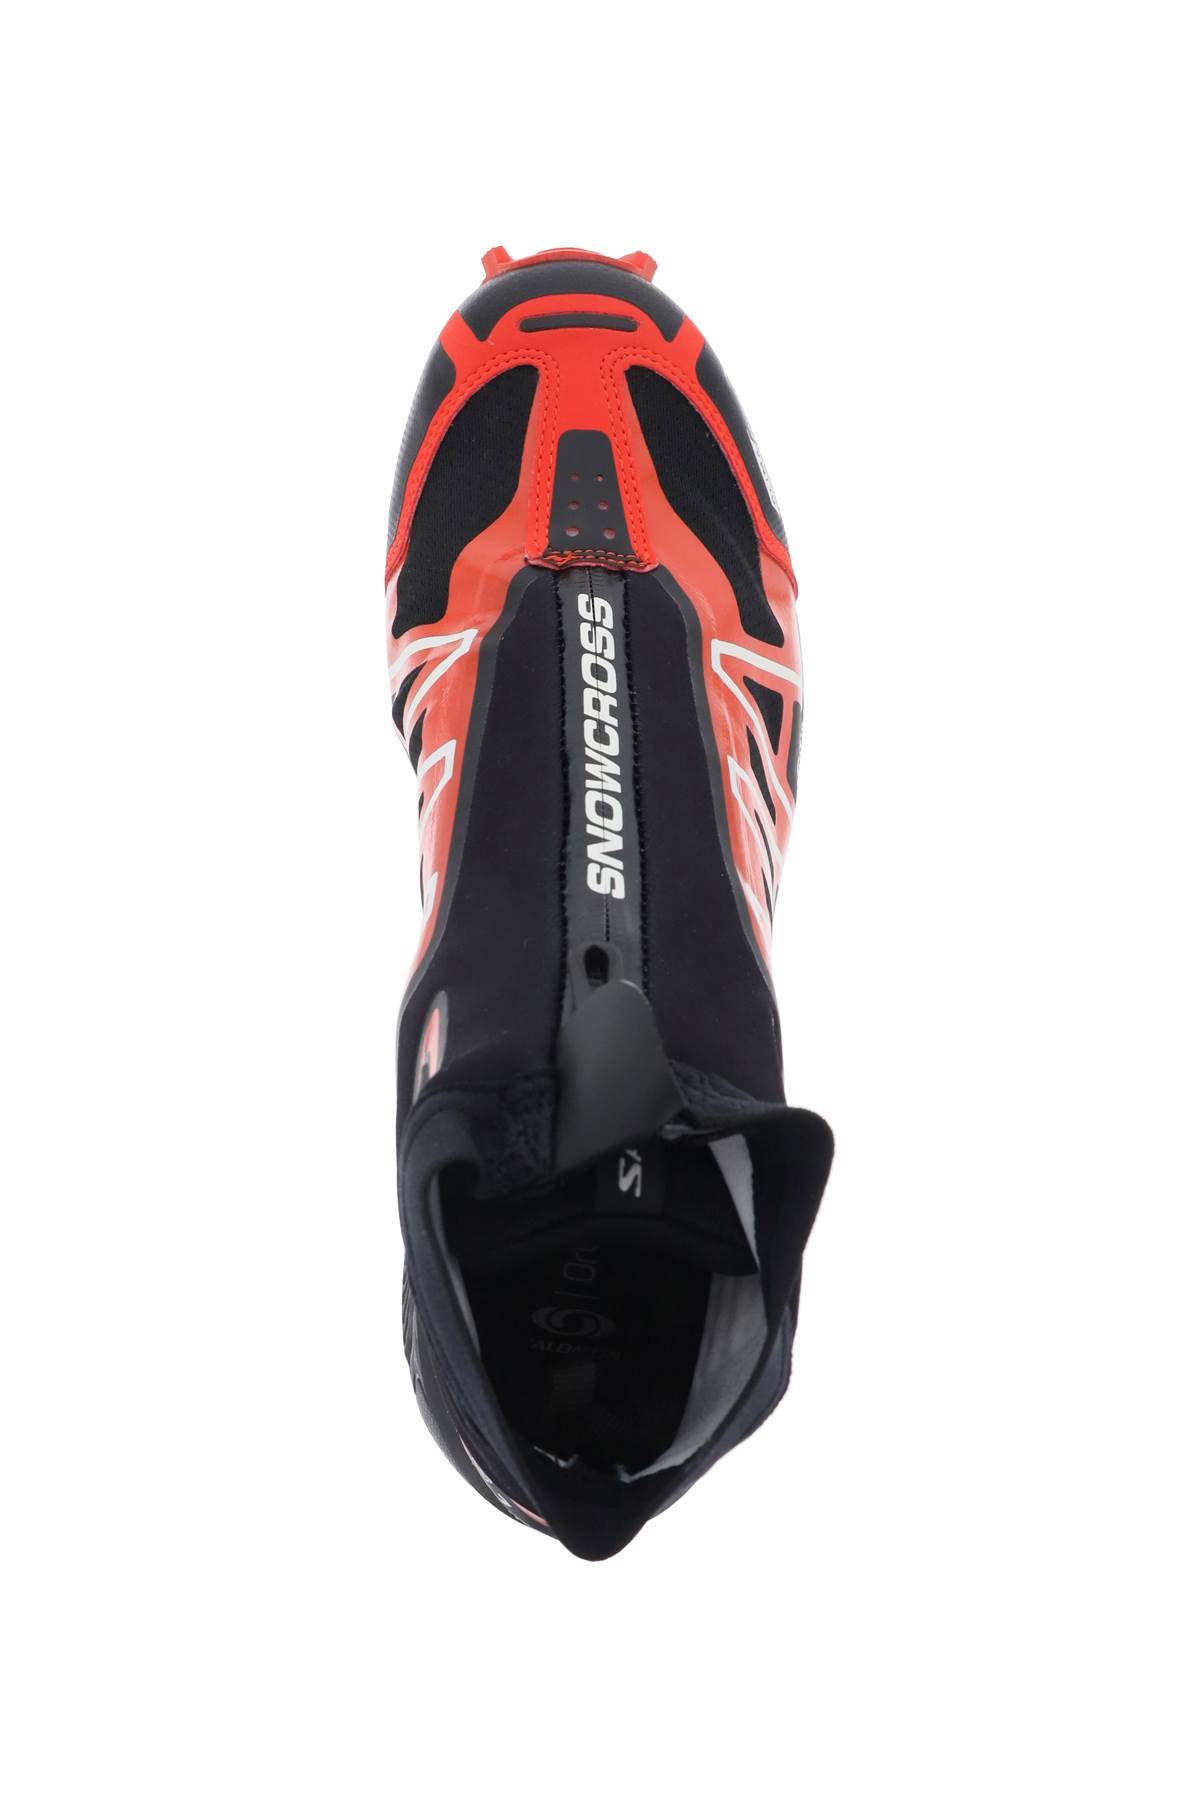 Shop Salomon Snowcross Sneakers In Black,red